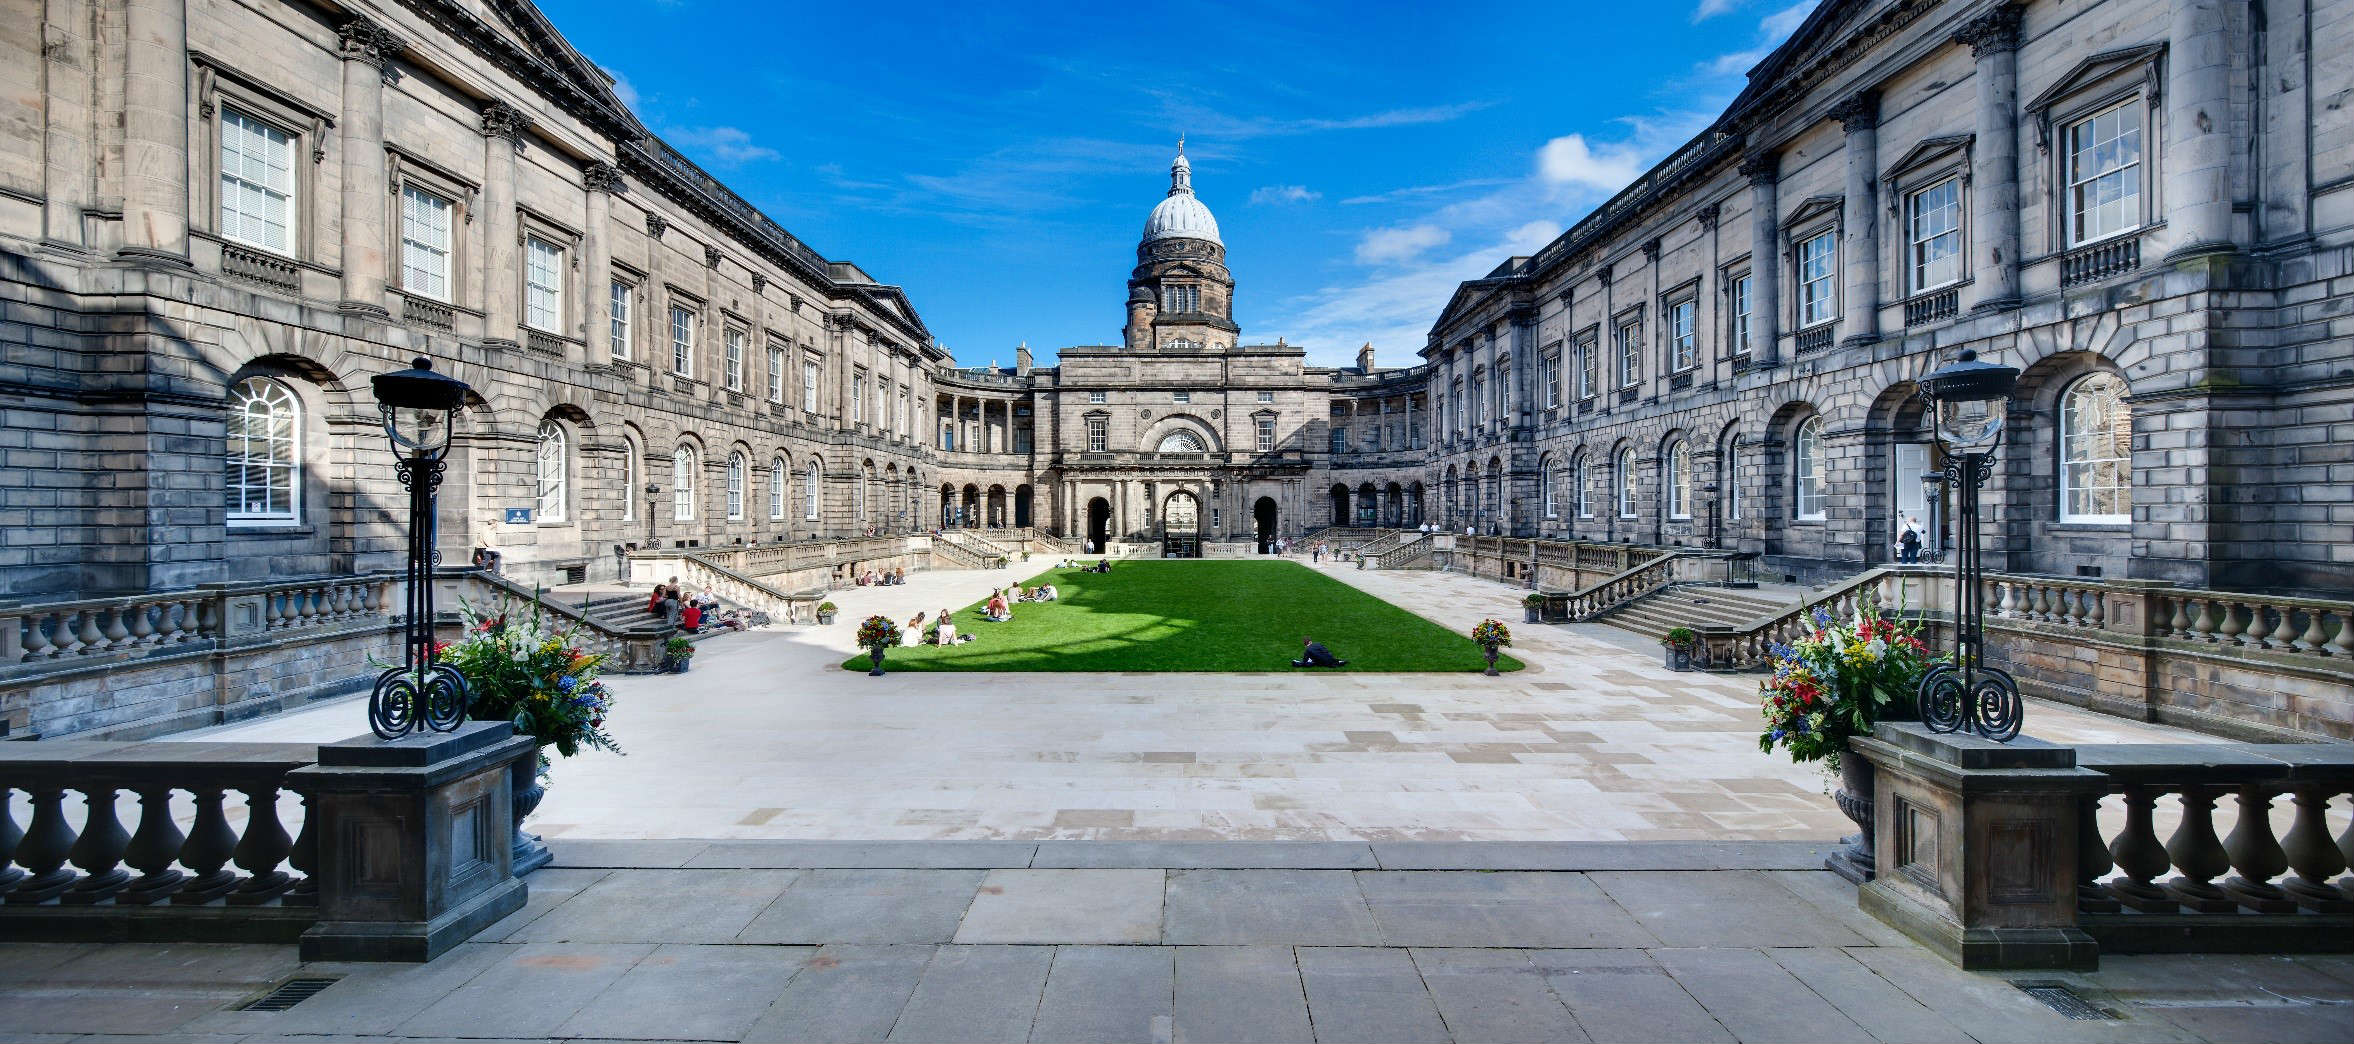 University of Edinburgh image